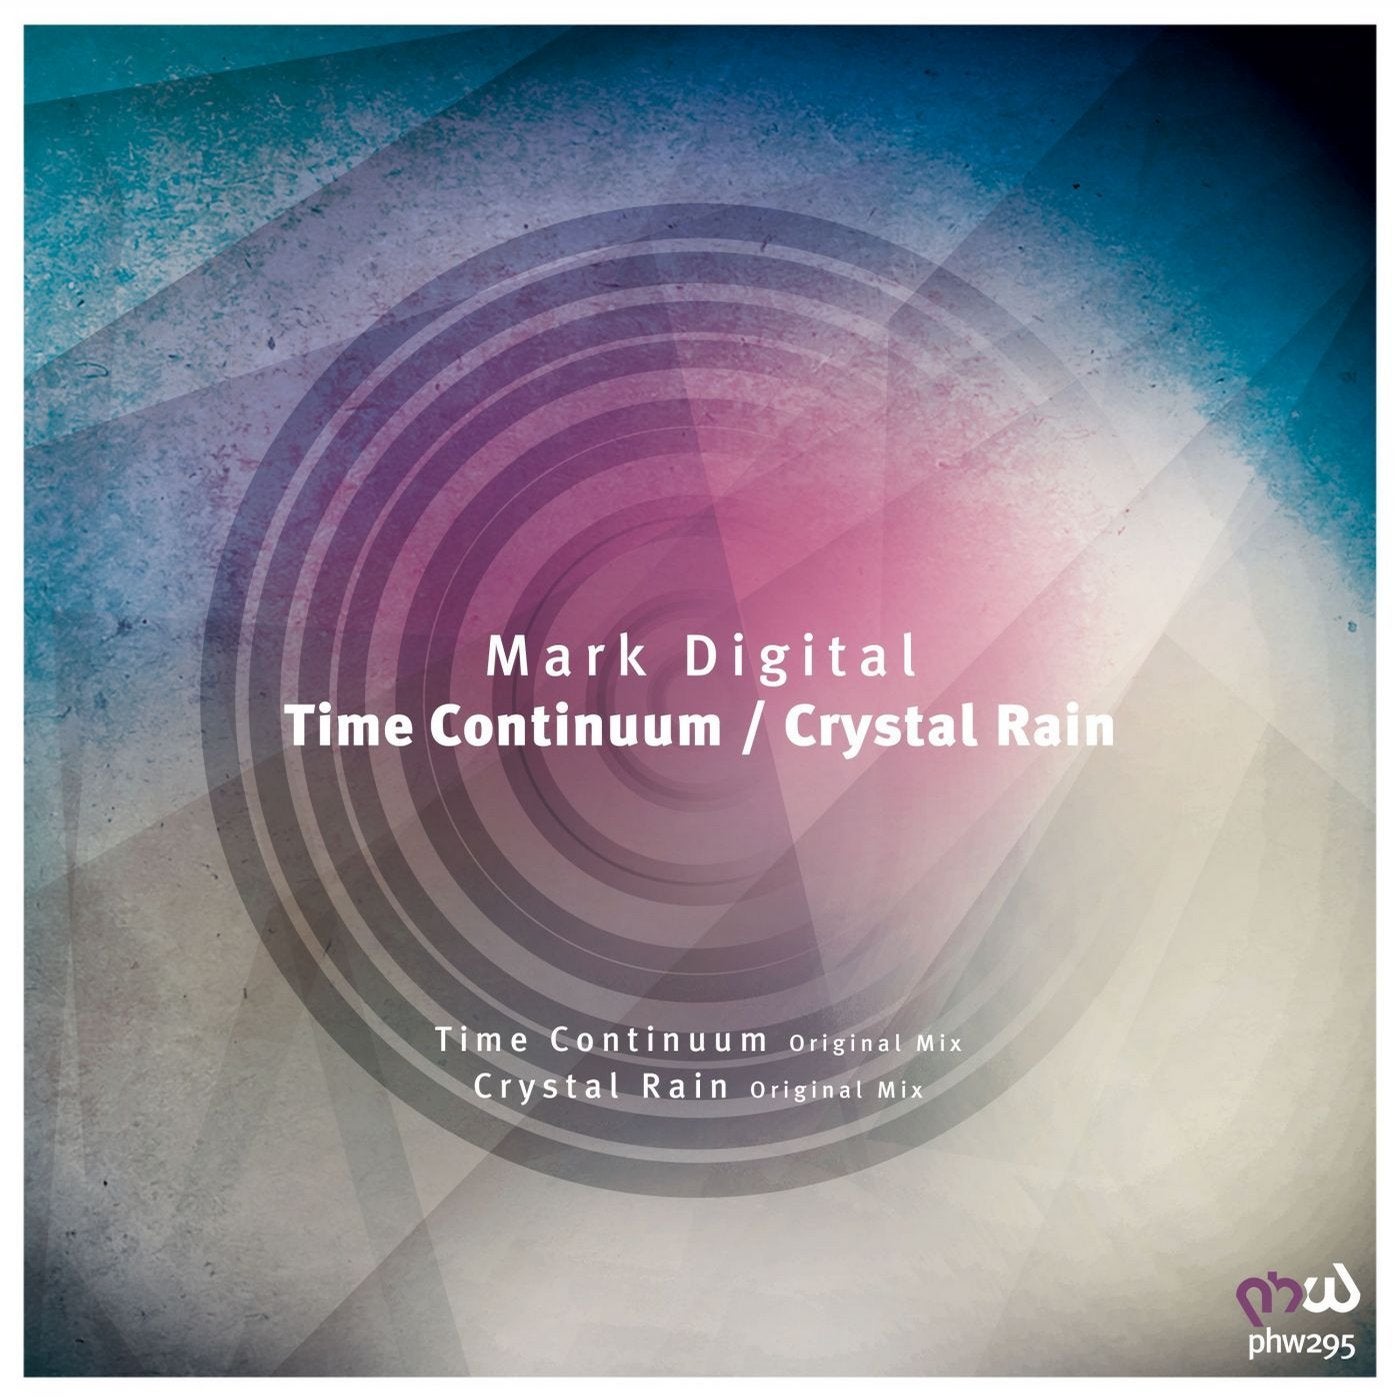 Time Continuum / Crystal Rain